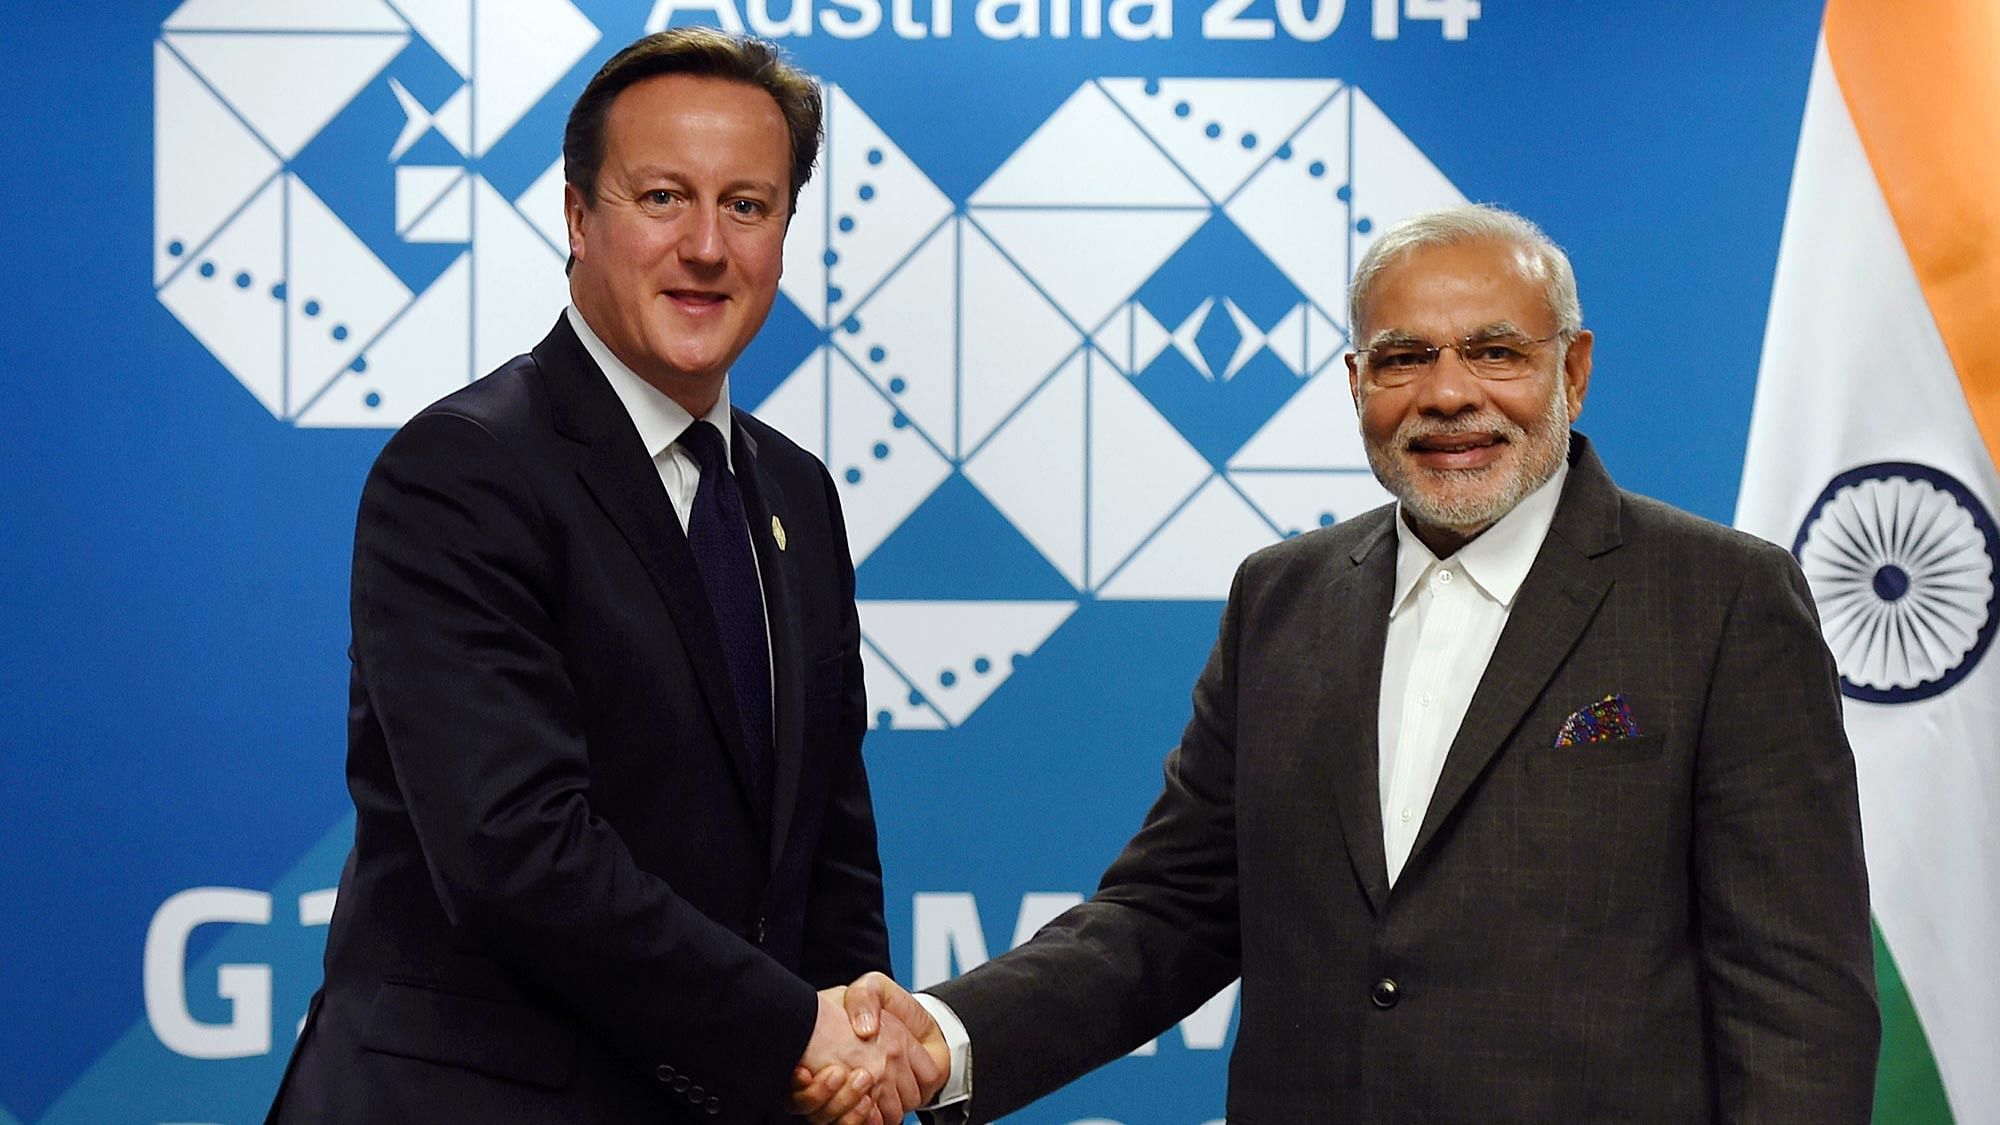 British PM David Cameron with Prime Minister Narendra Modi at the G20 Summit in Brisbane in 2014. (Photo: Reuters)